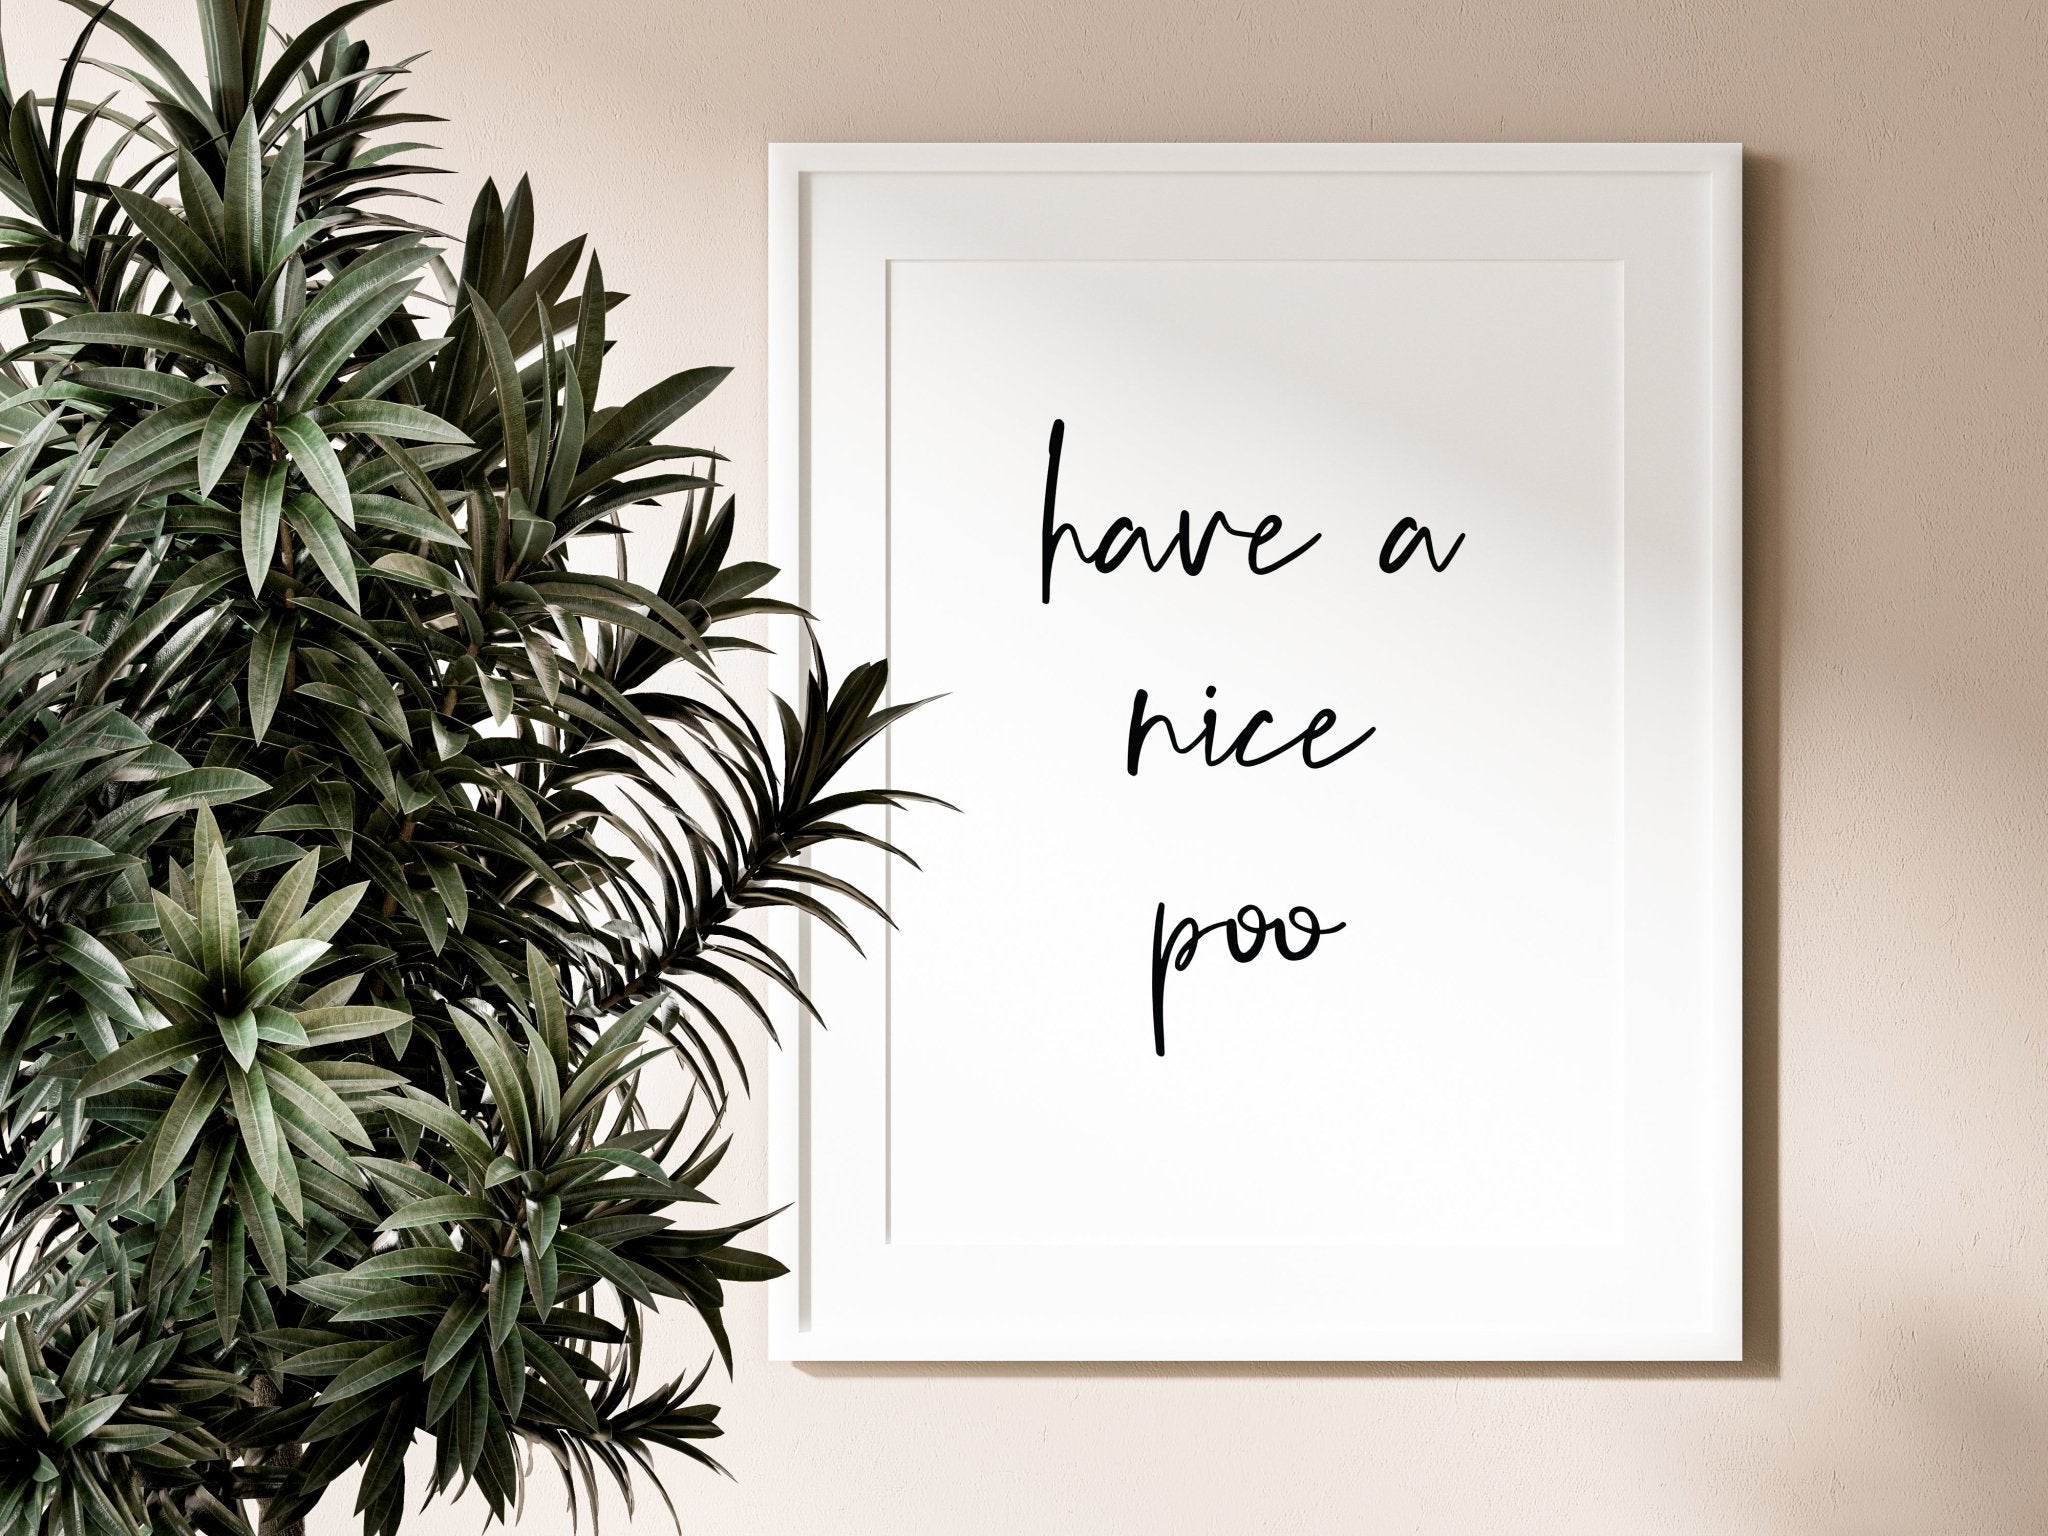 Have A Nice Poo Print